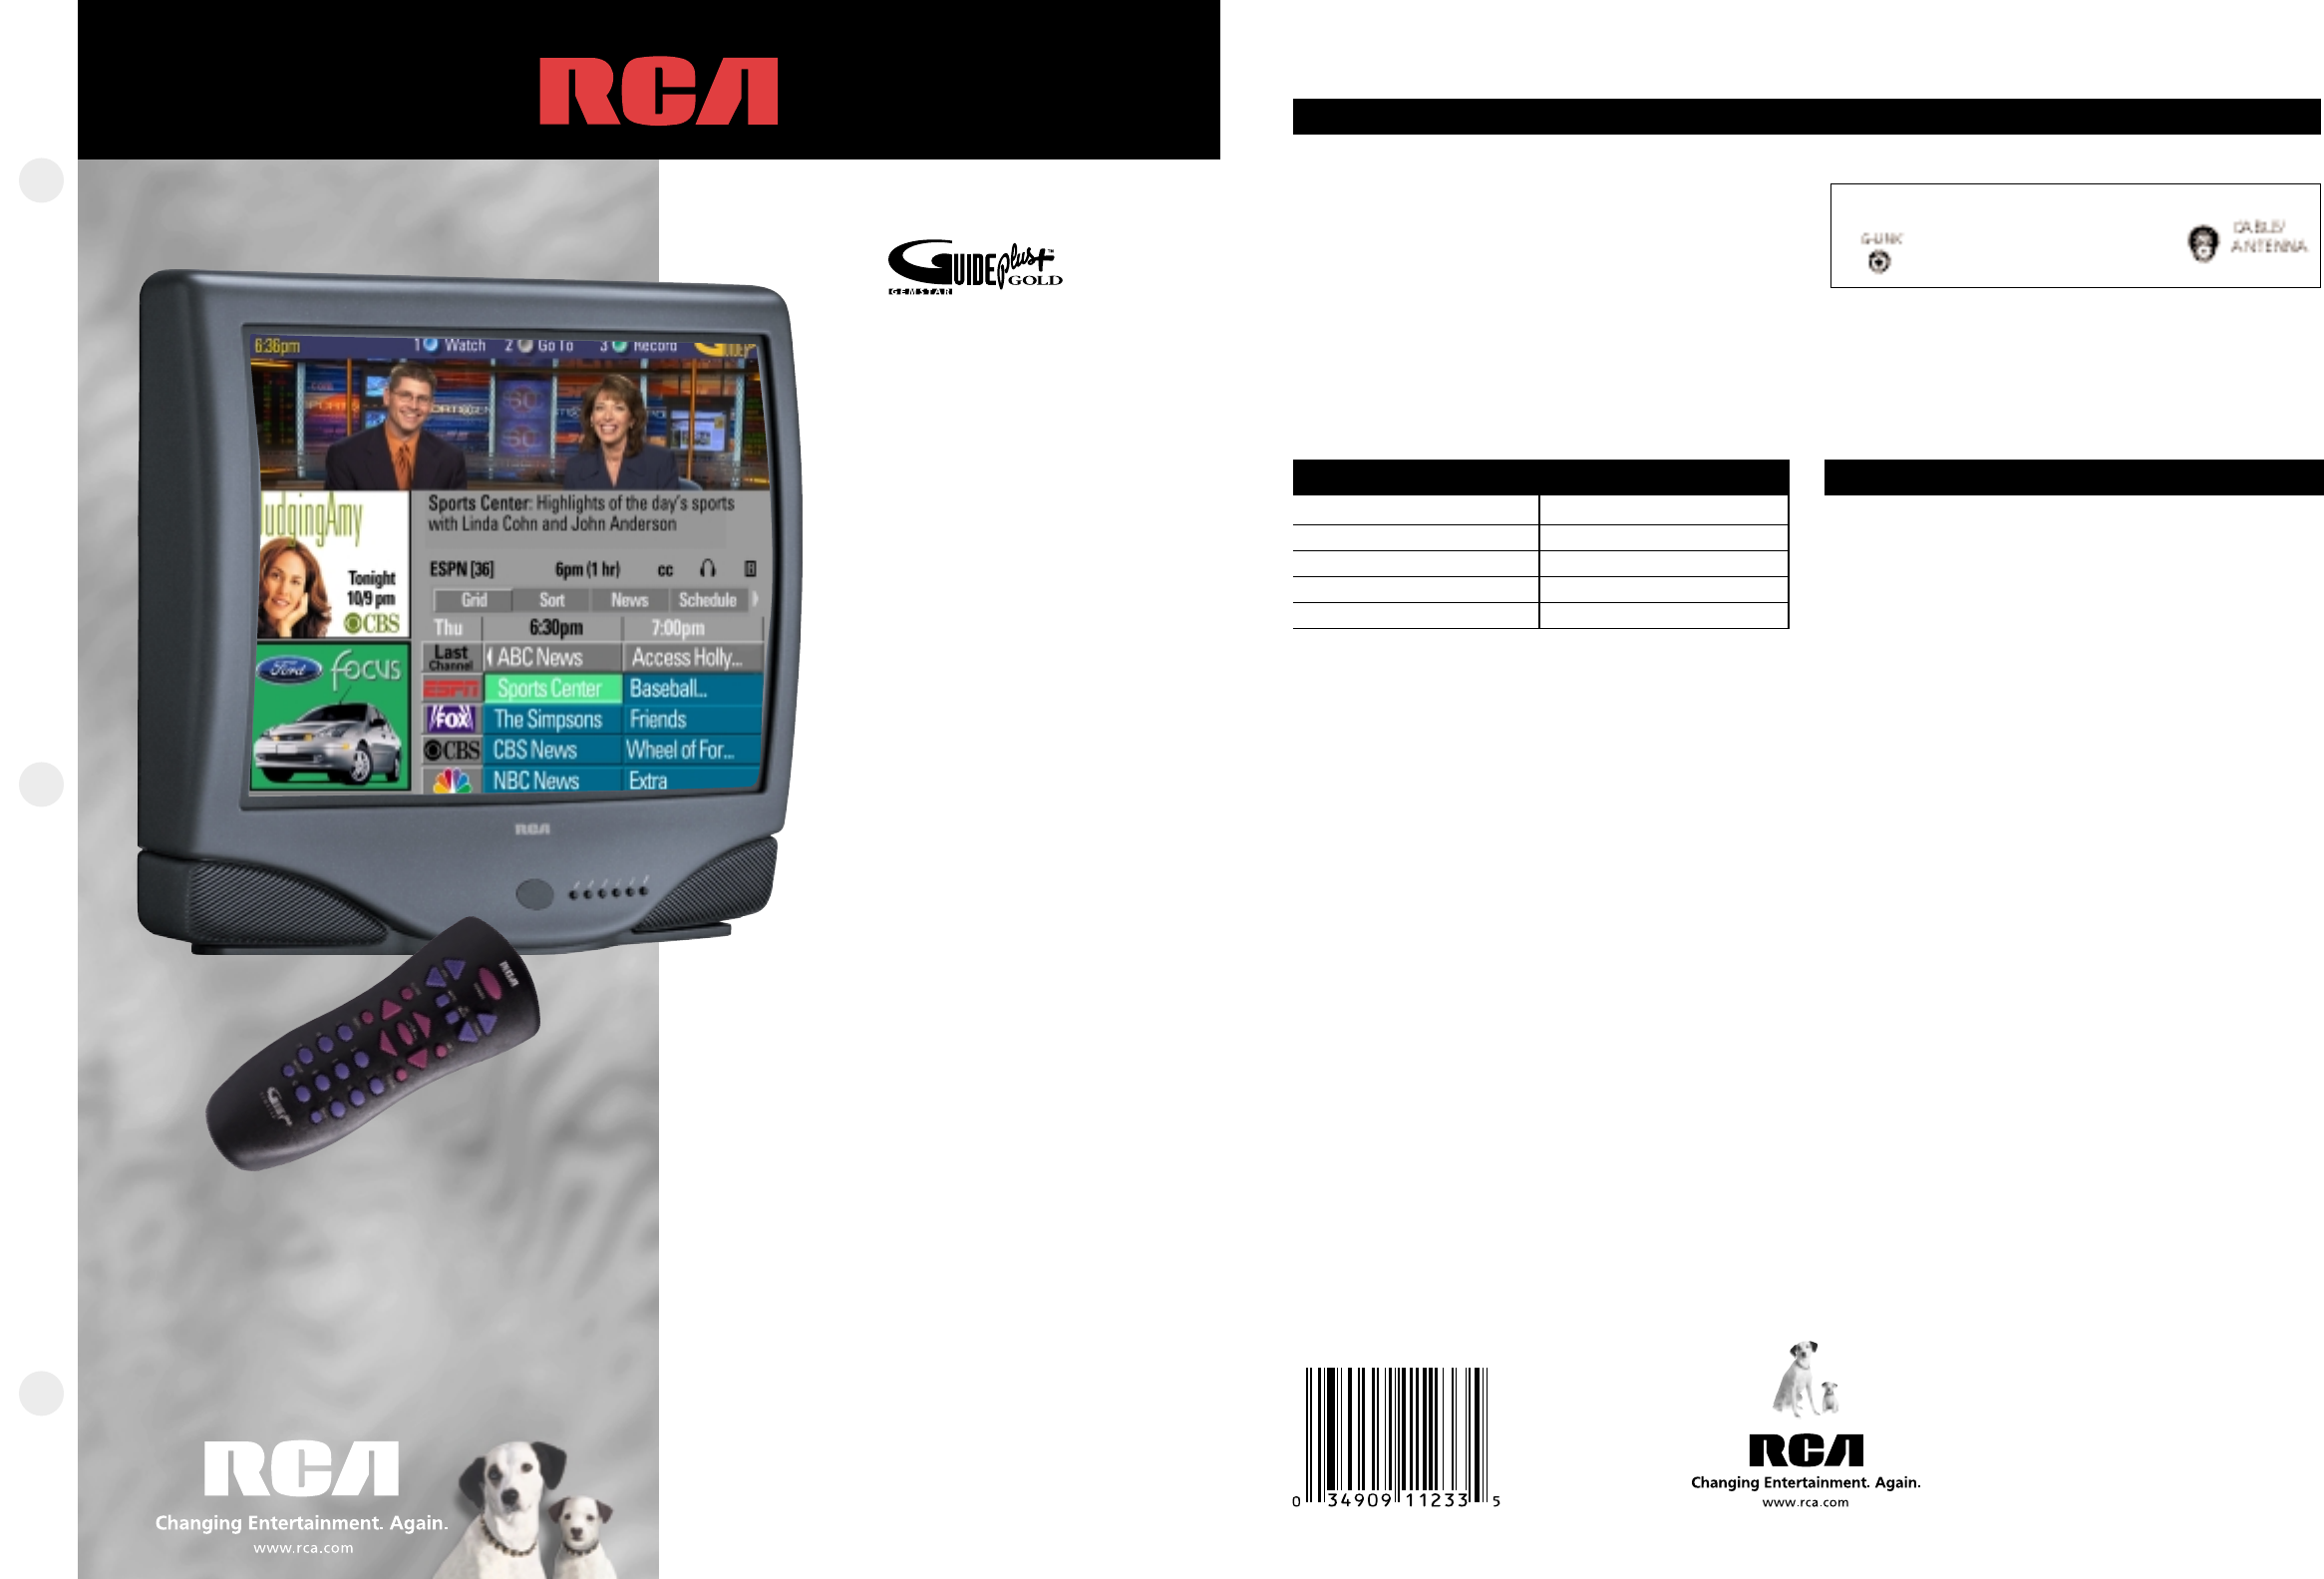 Rca universal control guide plus gemstar manual